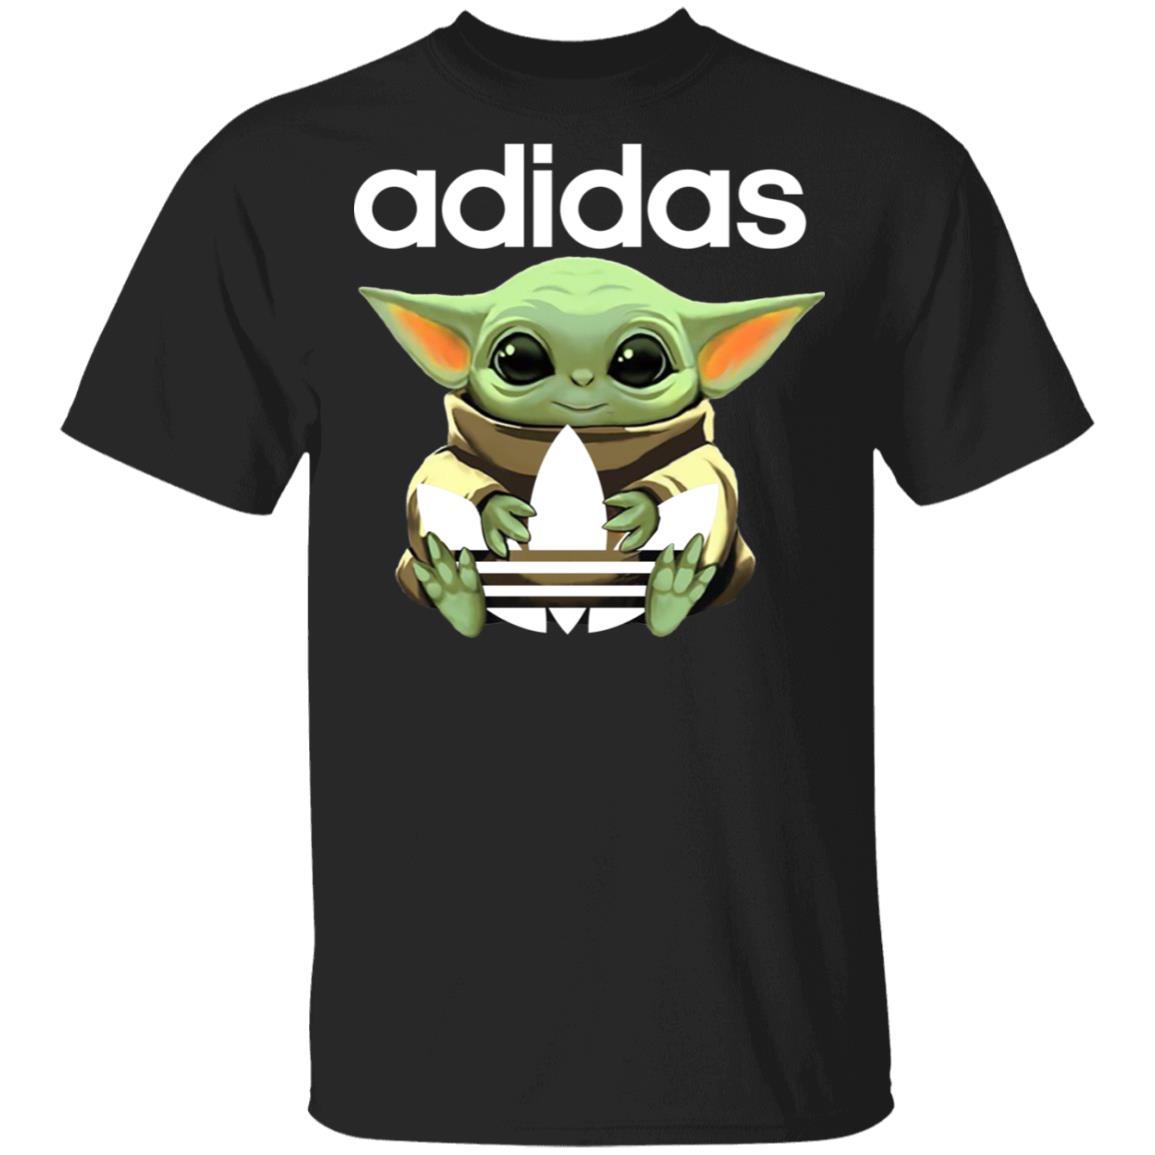 Adidas Star Wars Shirt Hoodie